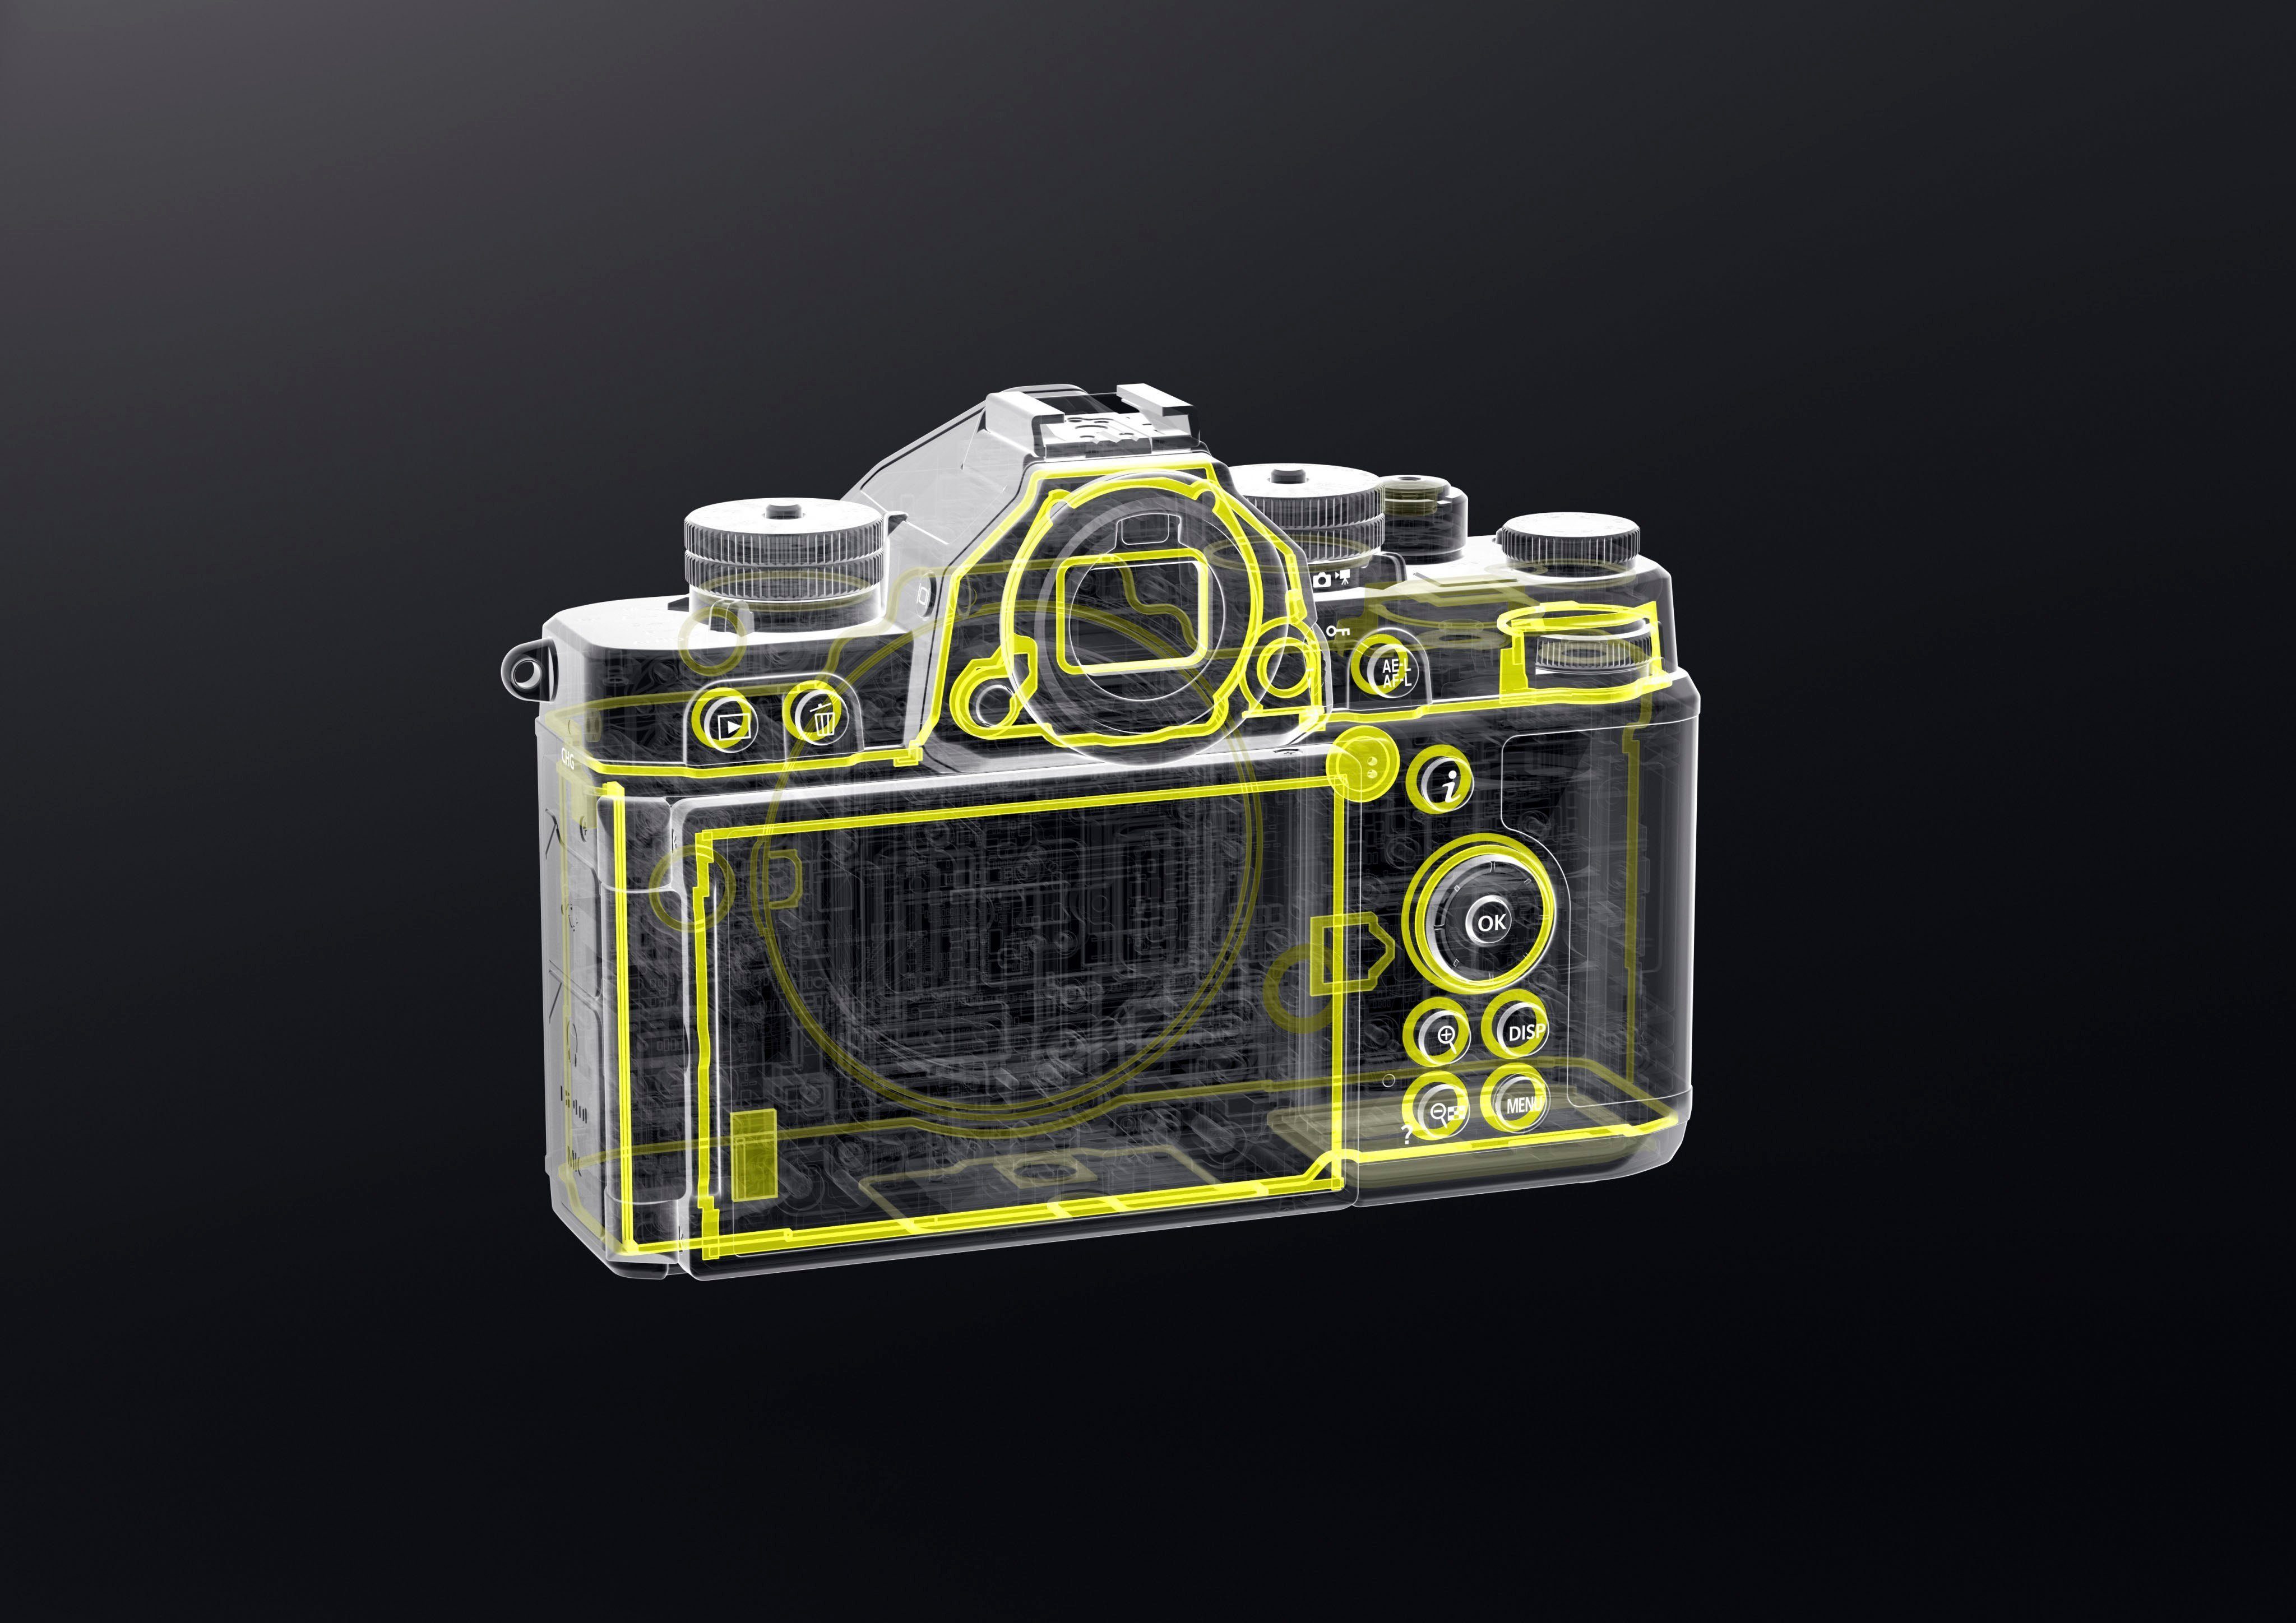 f4.0 + 24-70 S, (Nikkor f4 Bluetooth, Systemkamera Z WLAN) Z Nikon NIKKOR 24-70mm mm Z f